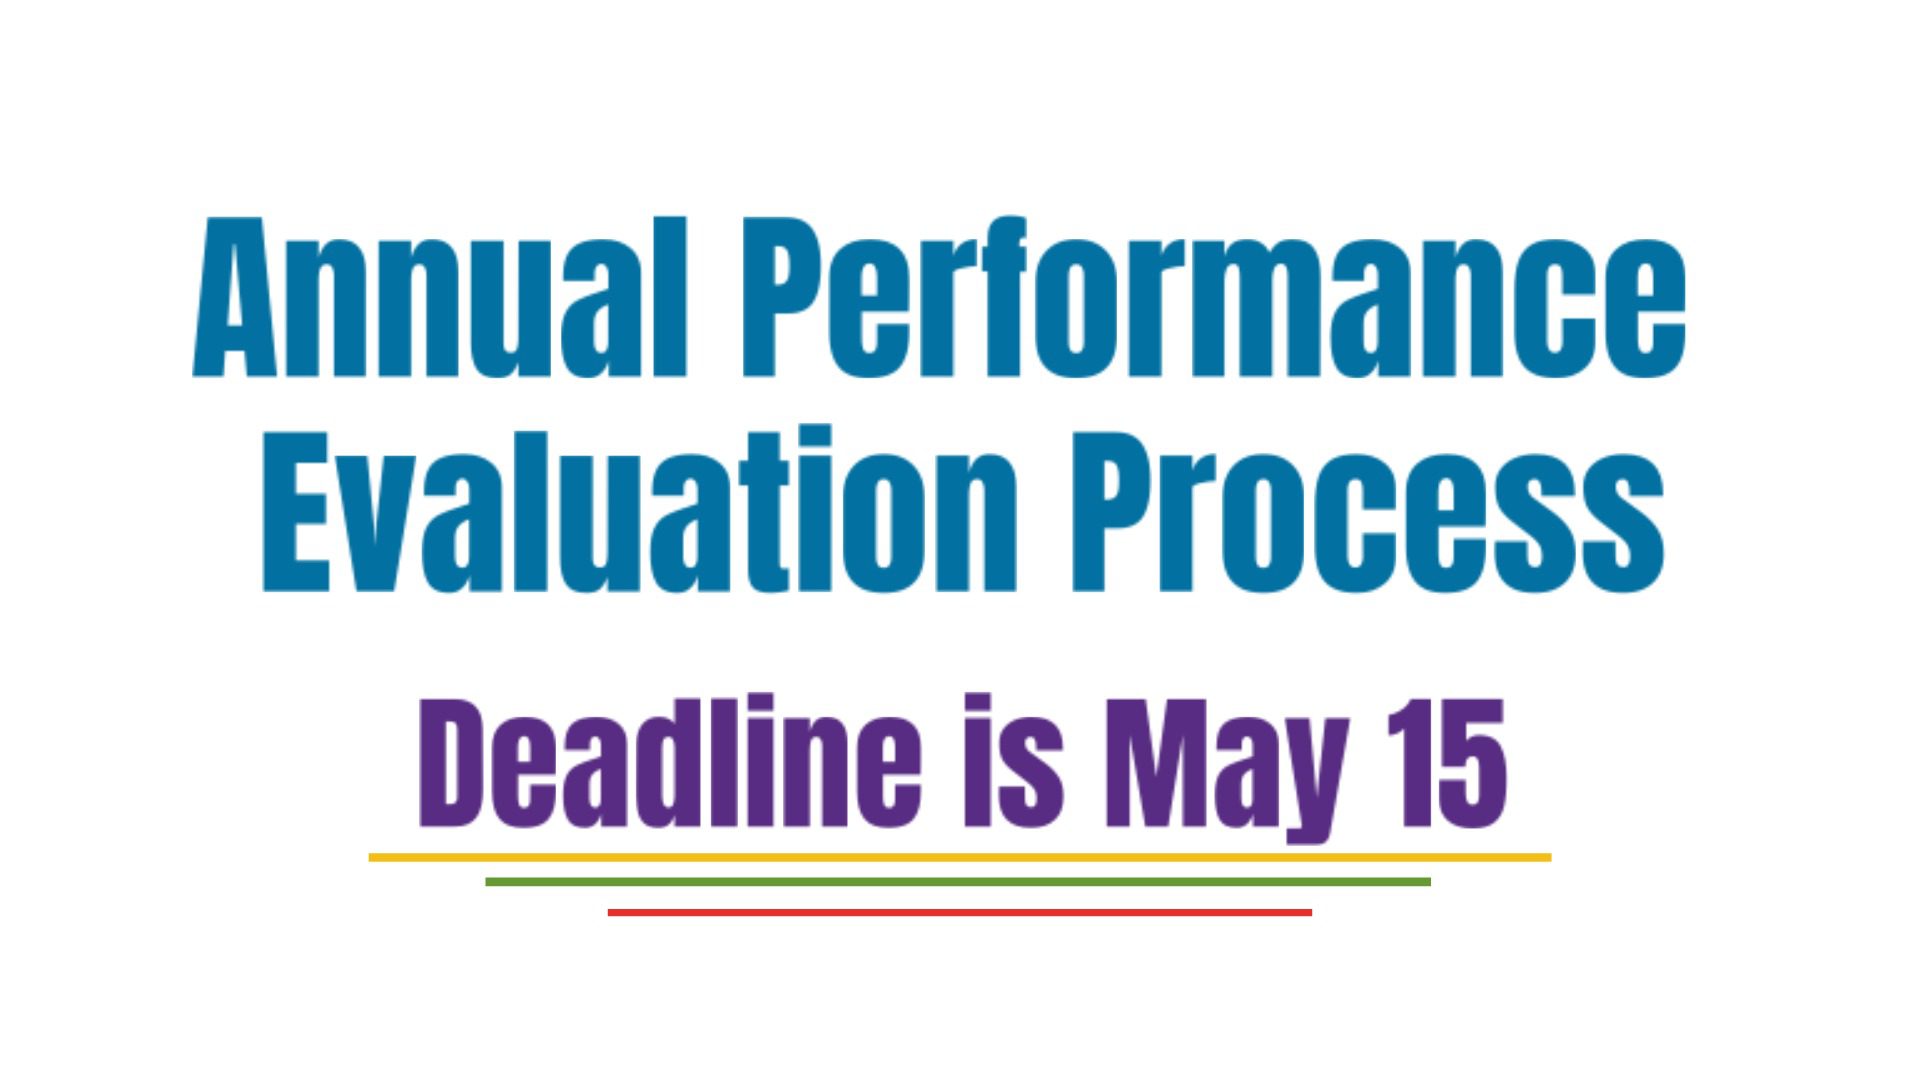 Artwork for deadline for Annual Performance Evaluation